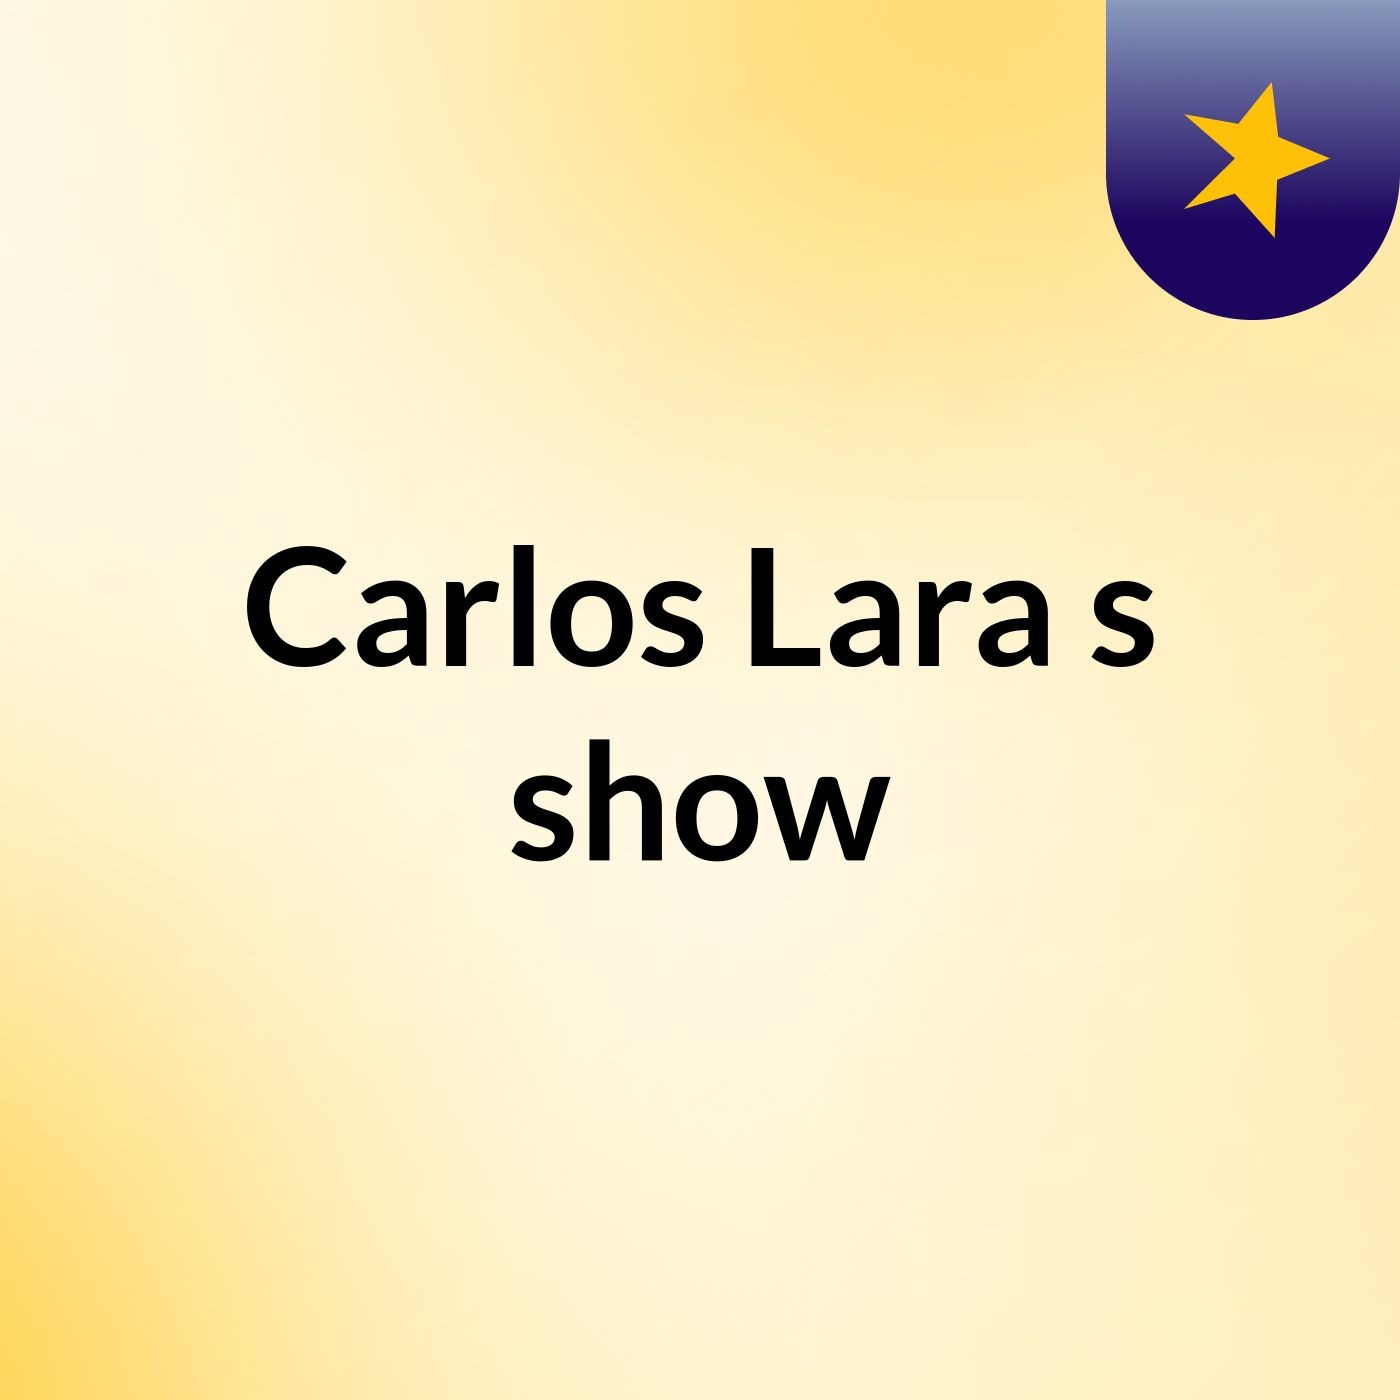 Carlos Lara's show